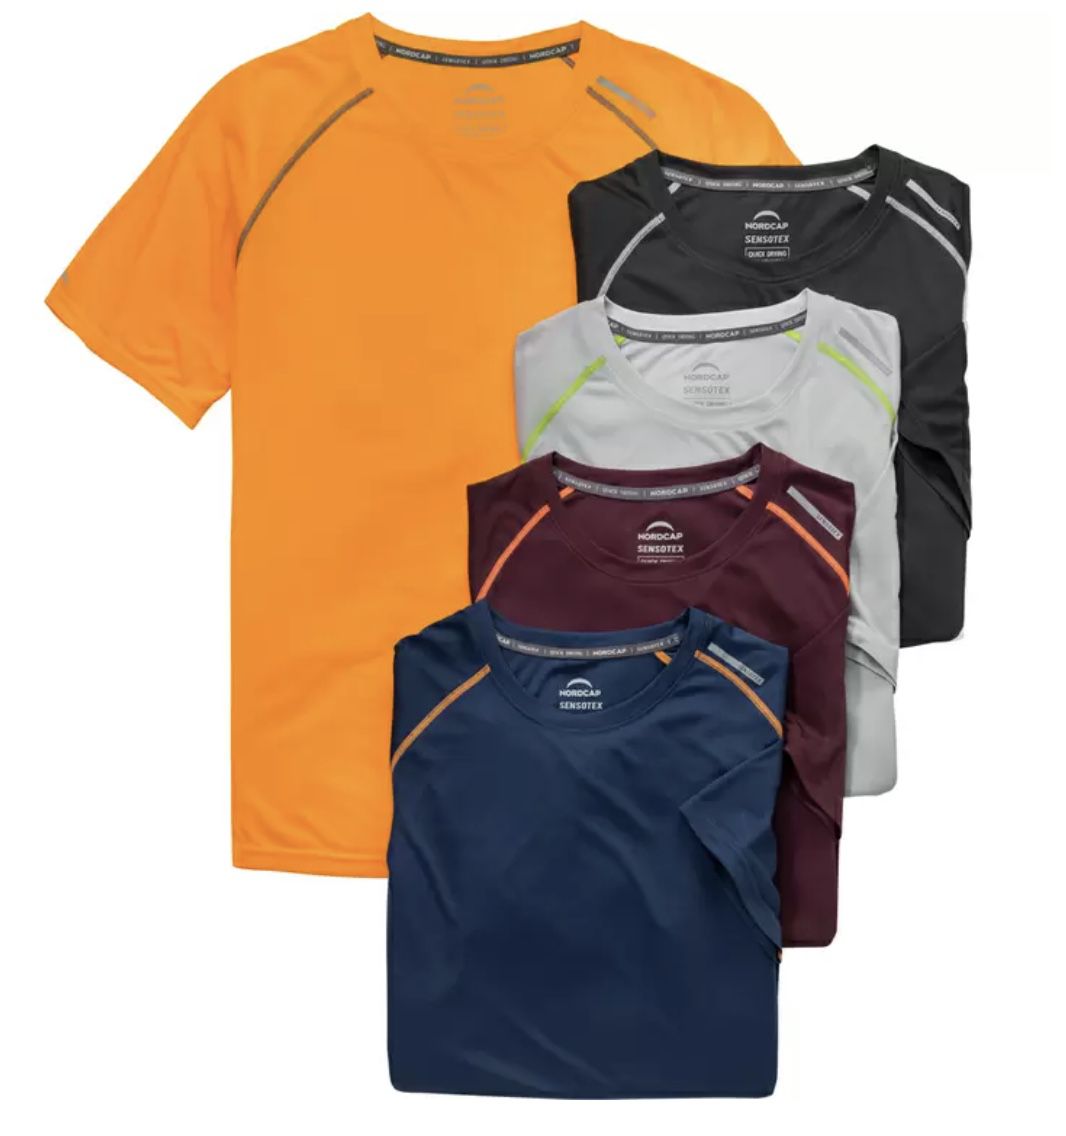 5er Pack Nordcap Funktions-Shirts für 39,99€ (statt 50€) + GRATIS große Kühltasche